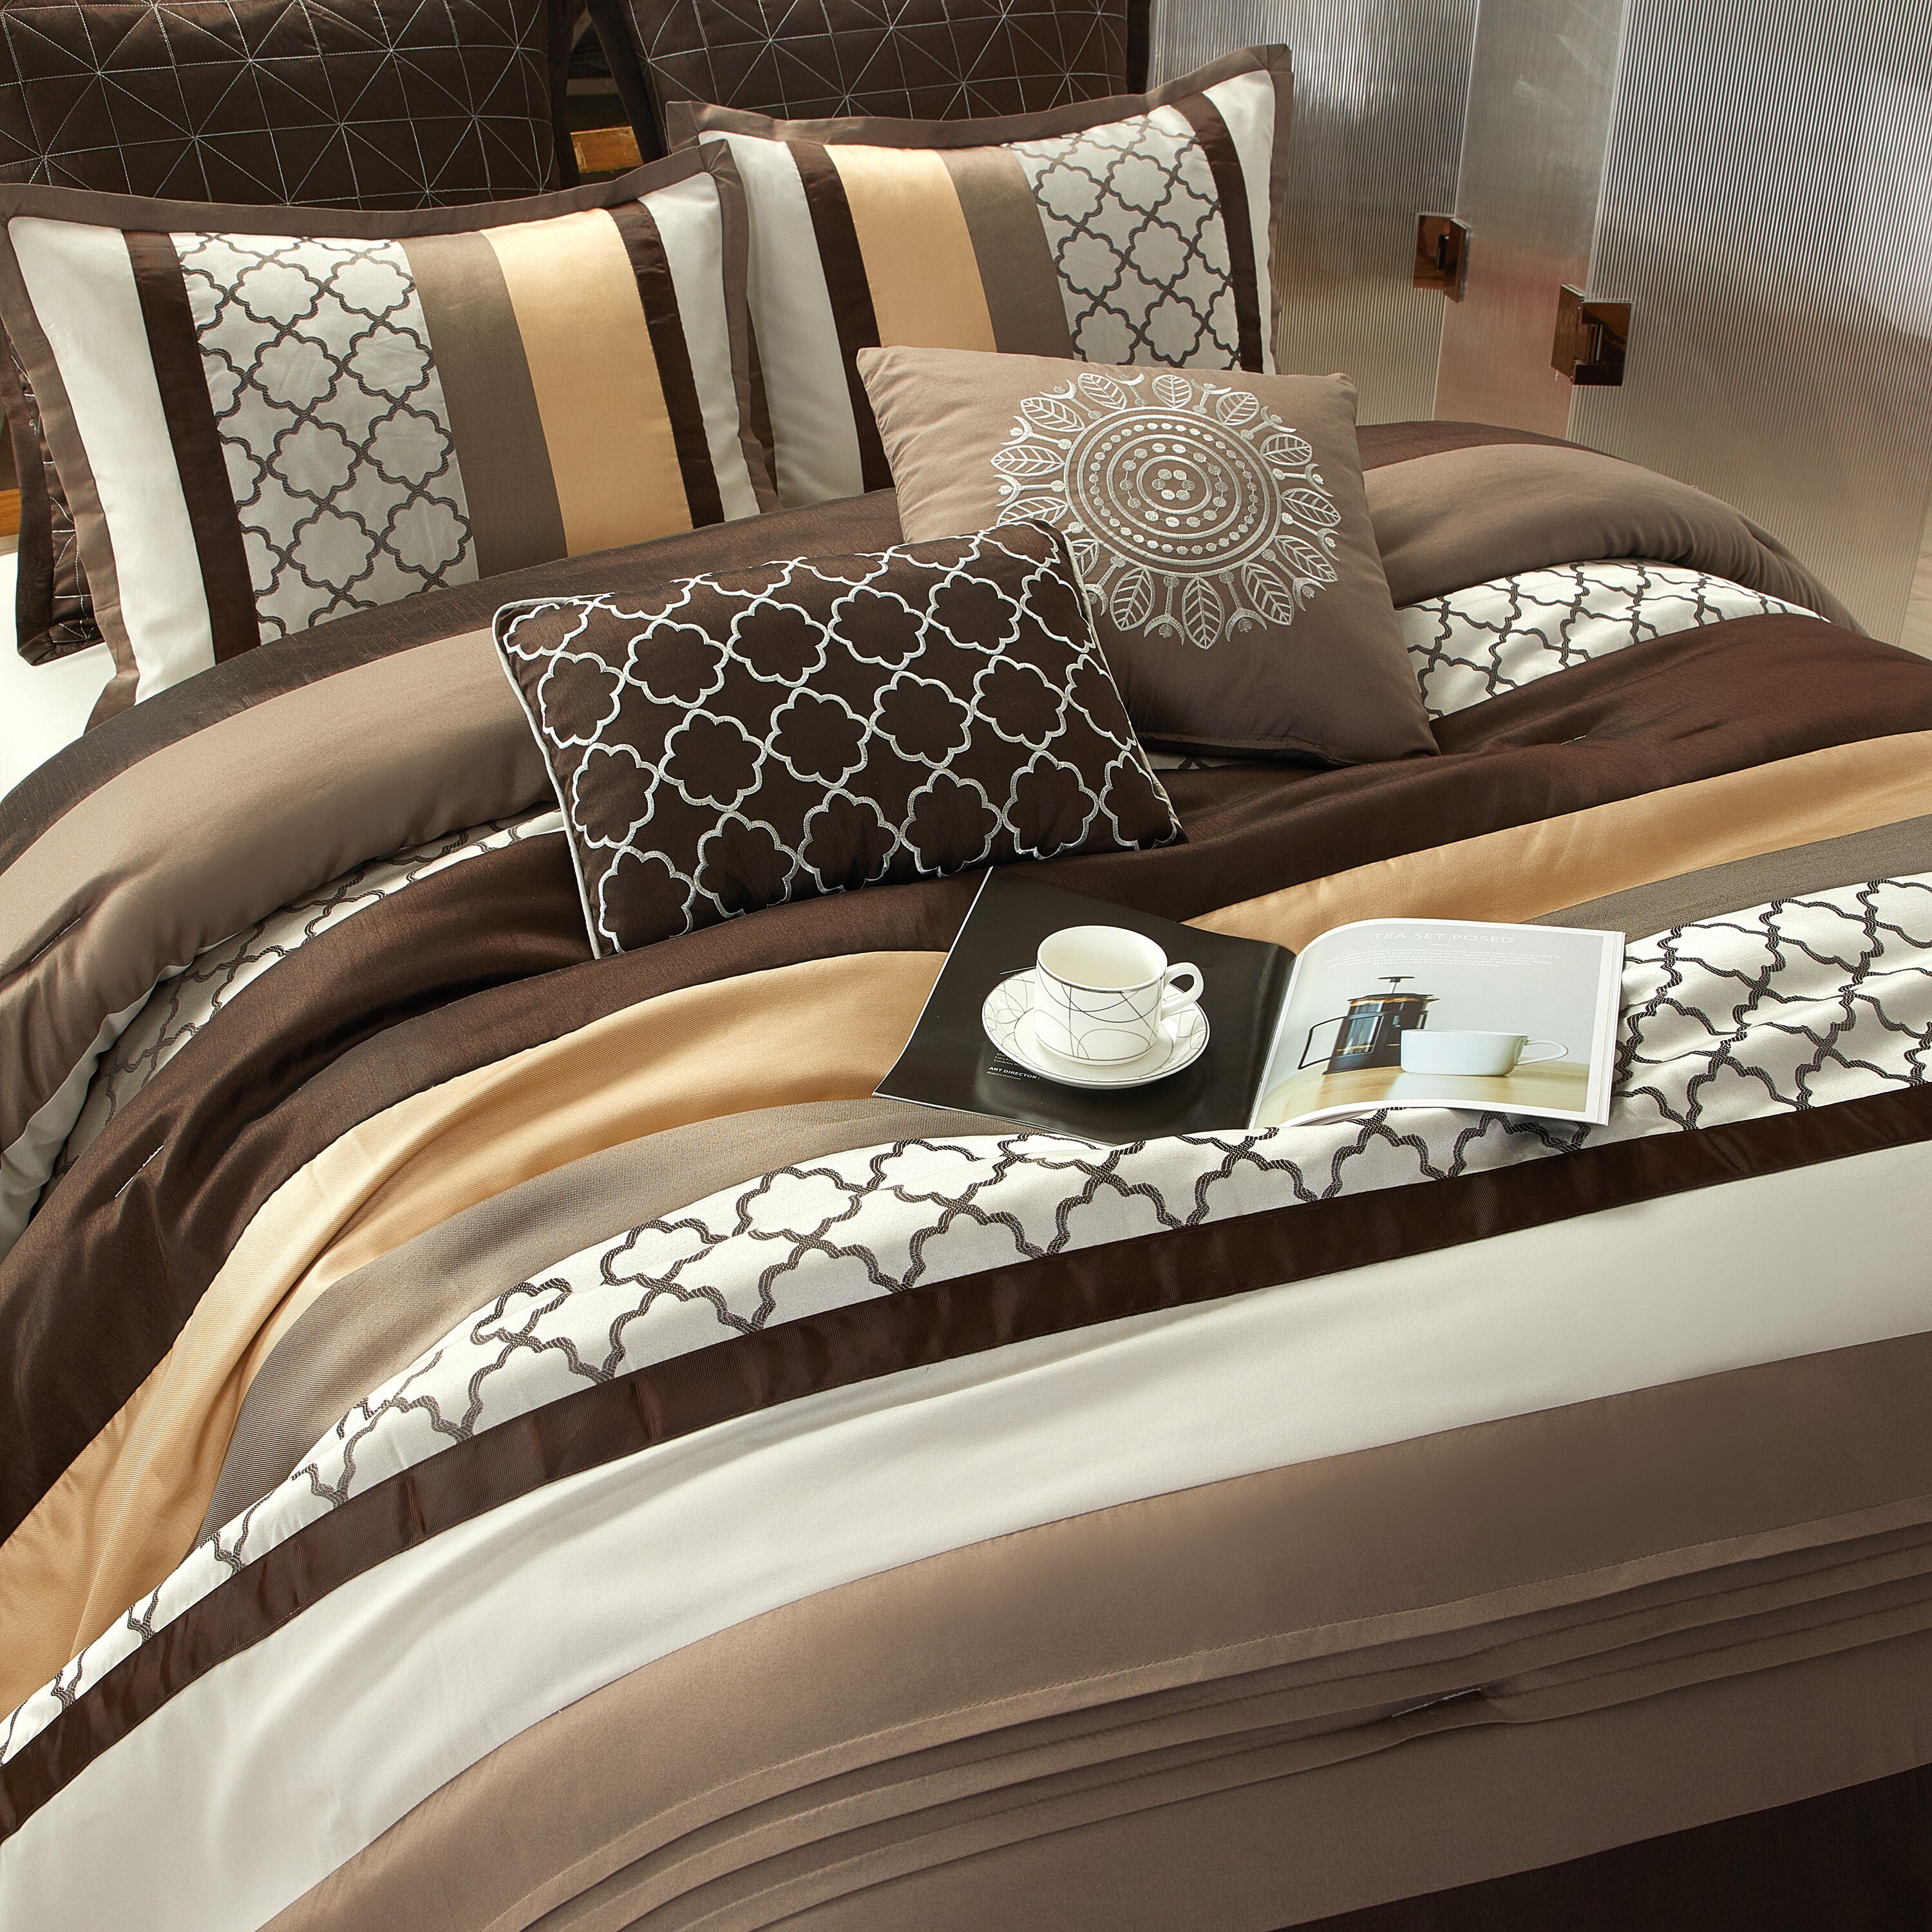 Grand Avenue 8-Piece Brown Queen Comforter Set in the Bedding Sets